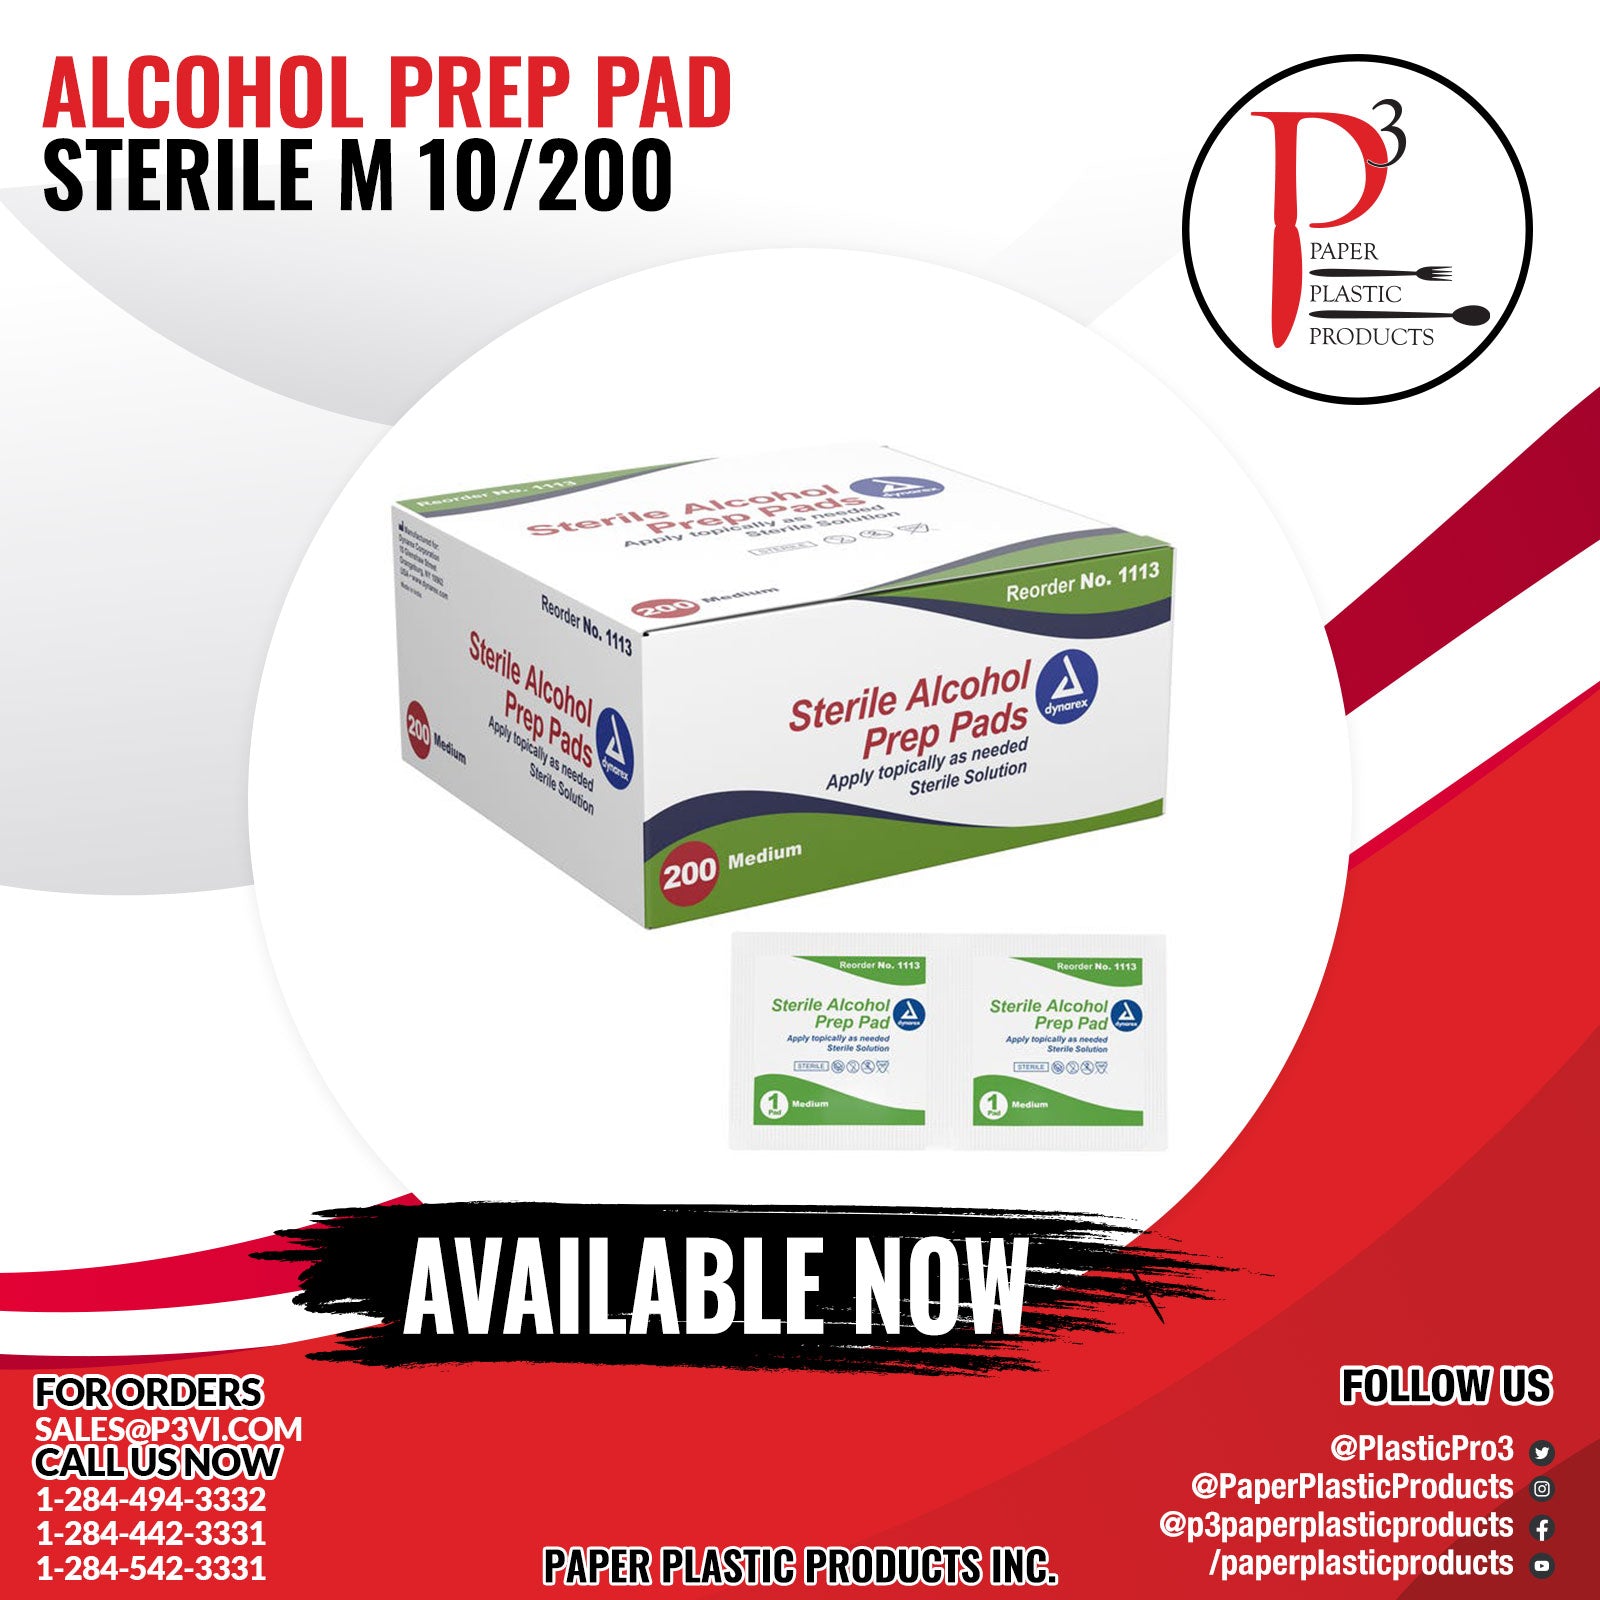 Alcohol Prep Pad Sterile M 10/200